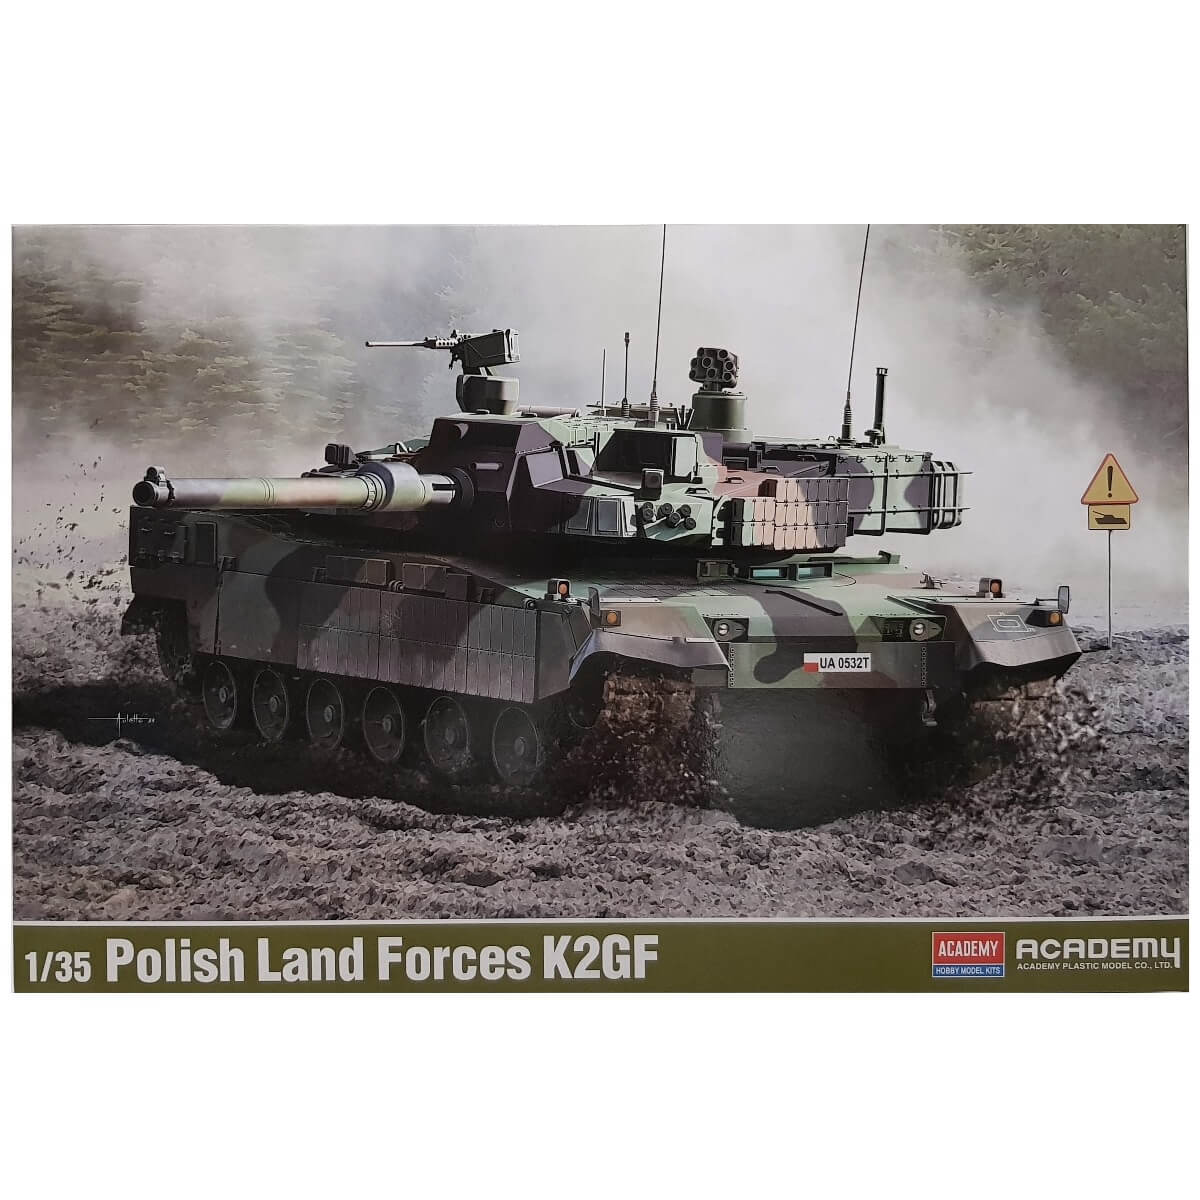 1:35 Polish Land Forces K2GF - ACADEMY